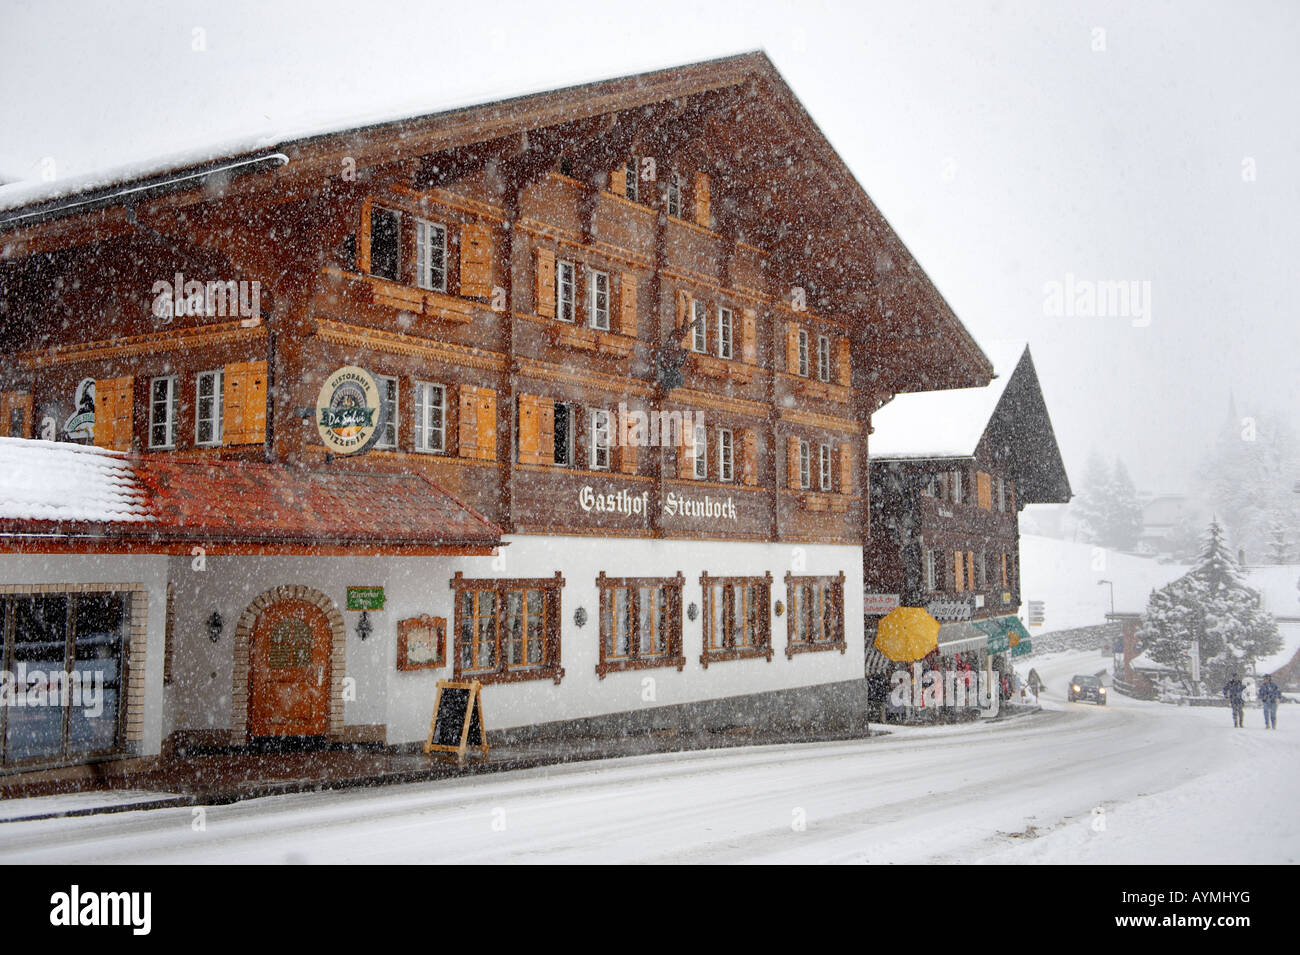 Hotel Gasthof Steinbock e il negozio in presenza di un notevole manto di neve caduta - Grindelwald - Brenese Alpi Svizzere Foto Stock